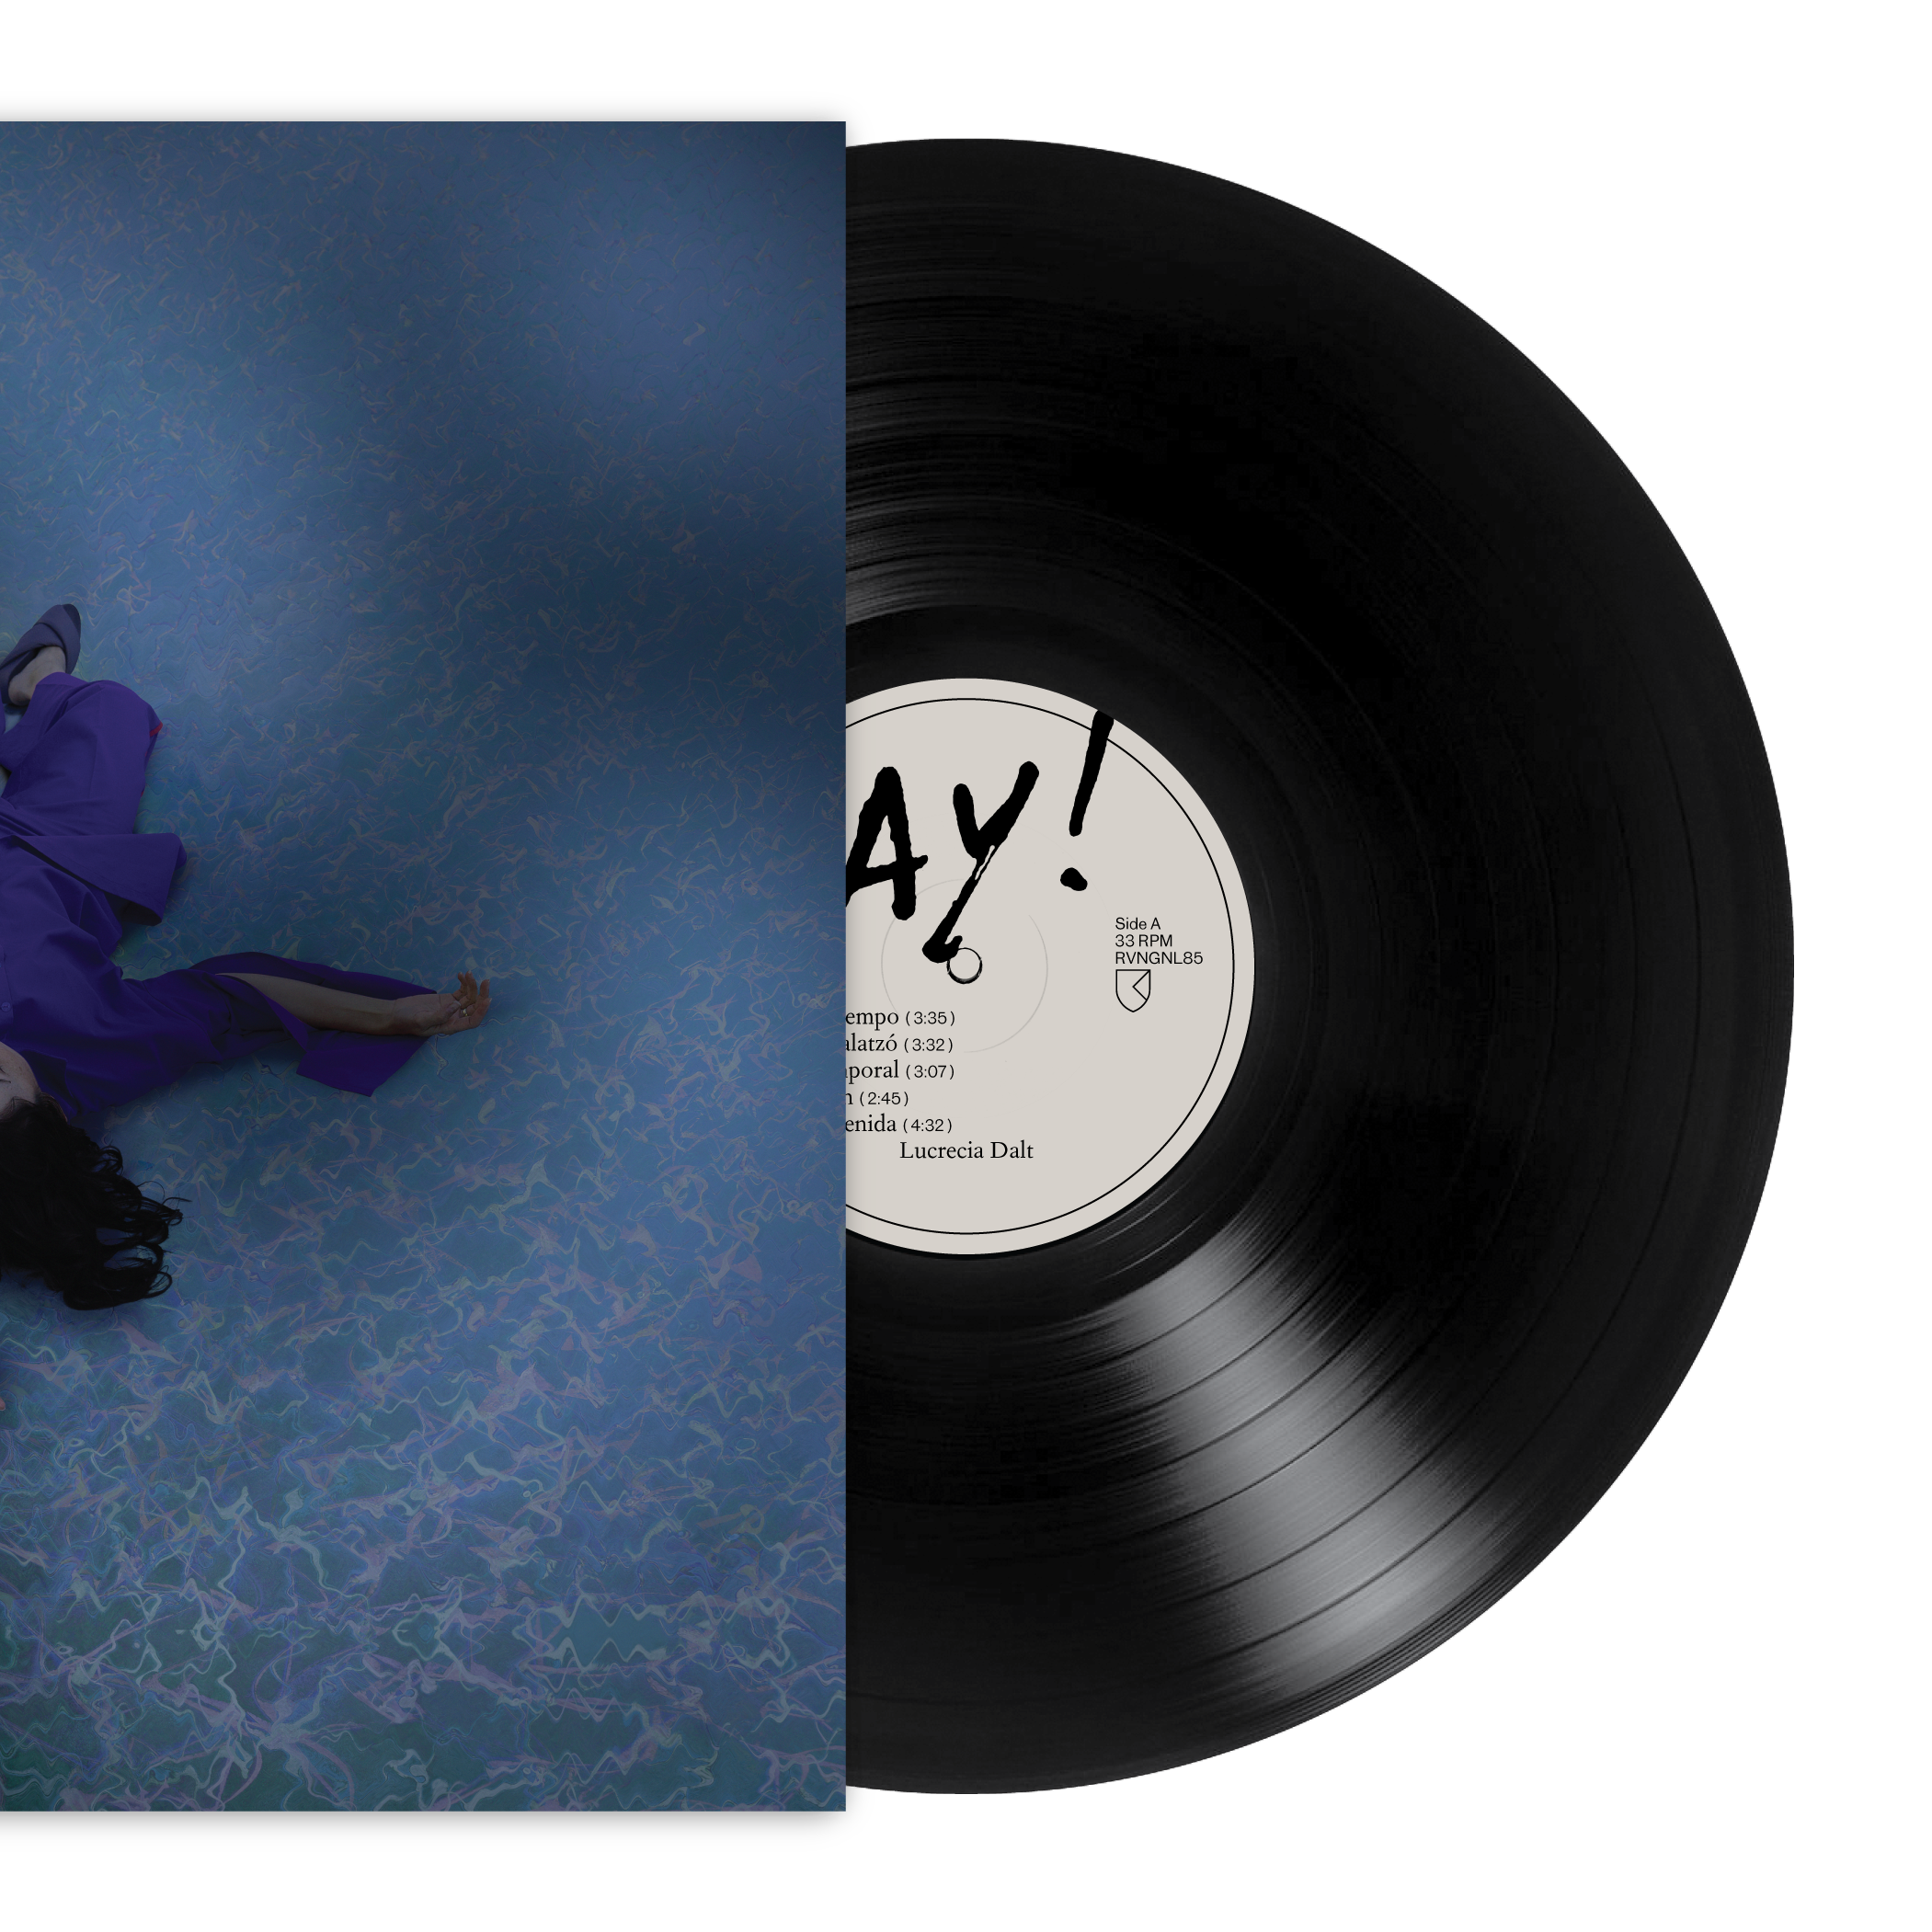 ¡Ay!: Vinyl LP